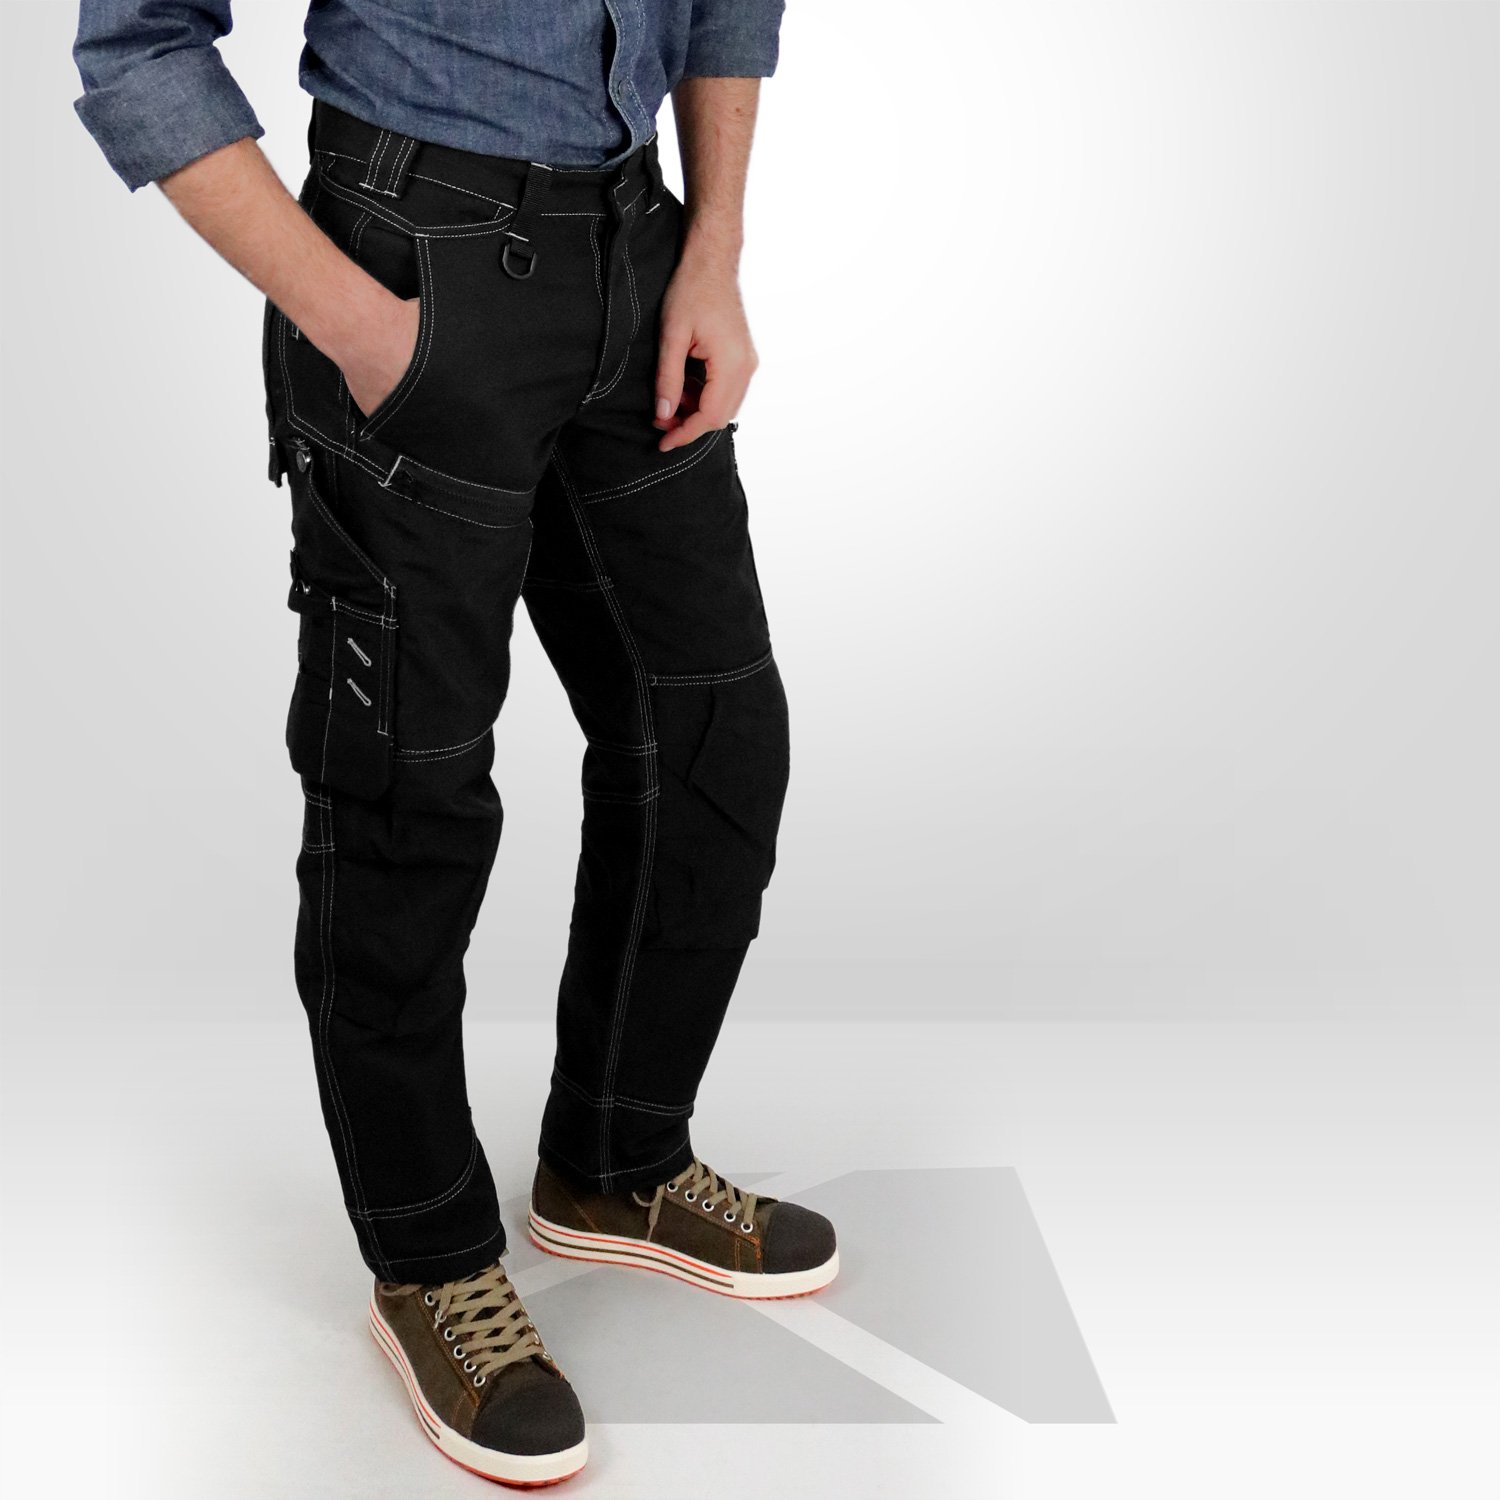 Pantalon de travail enfant solide BLAKLADER X1500